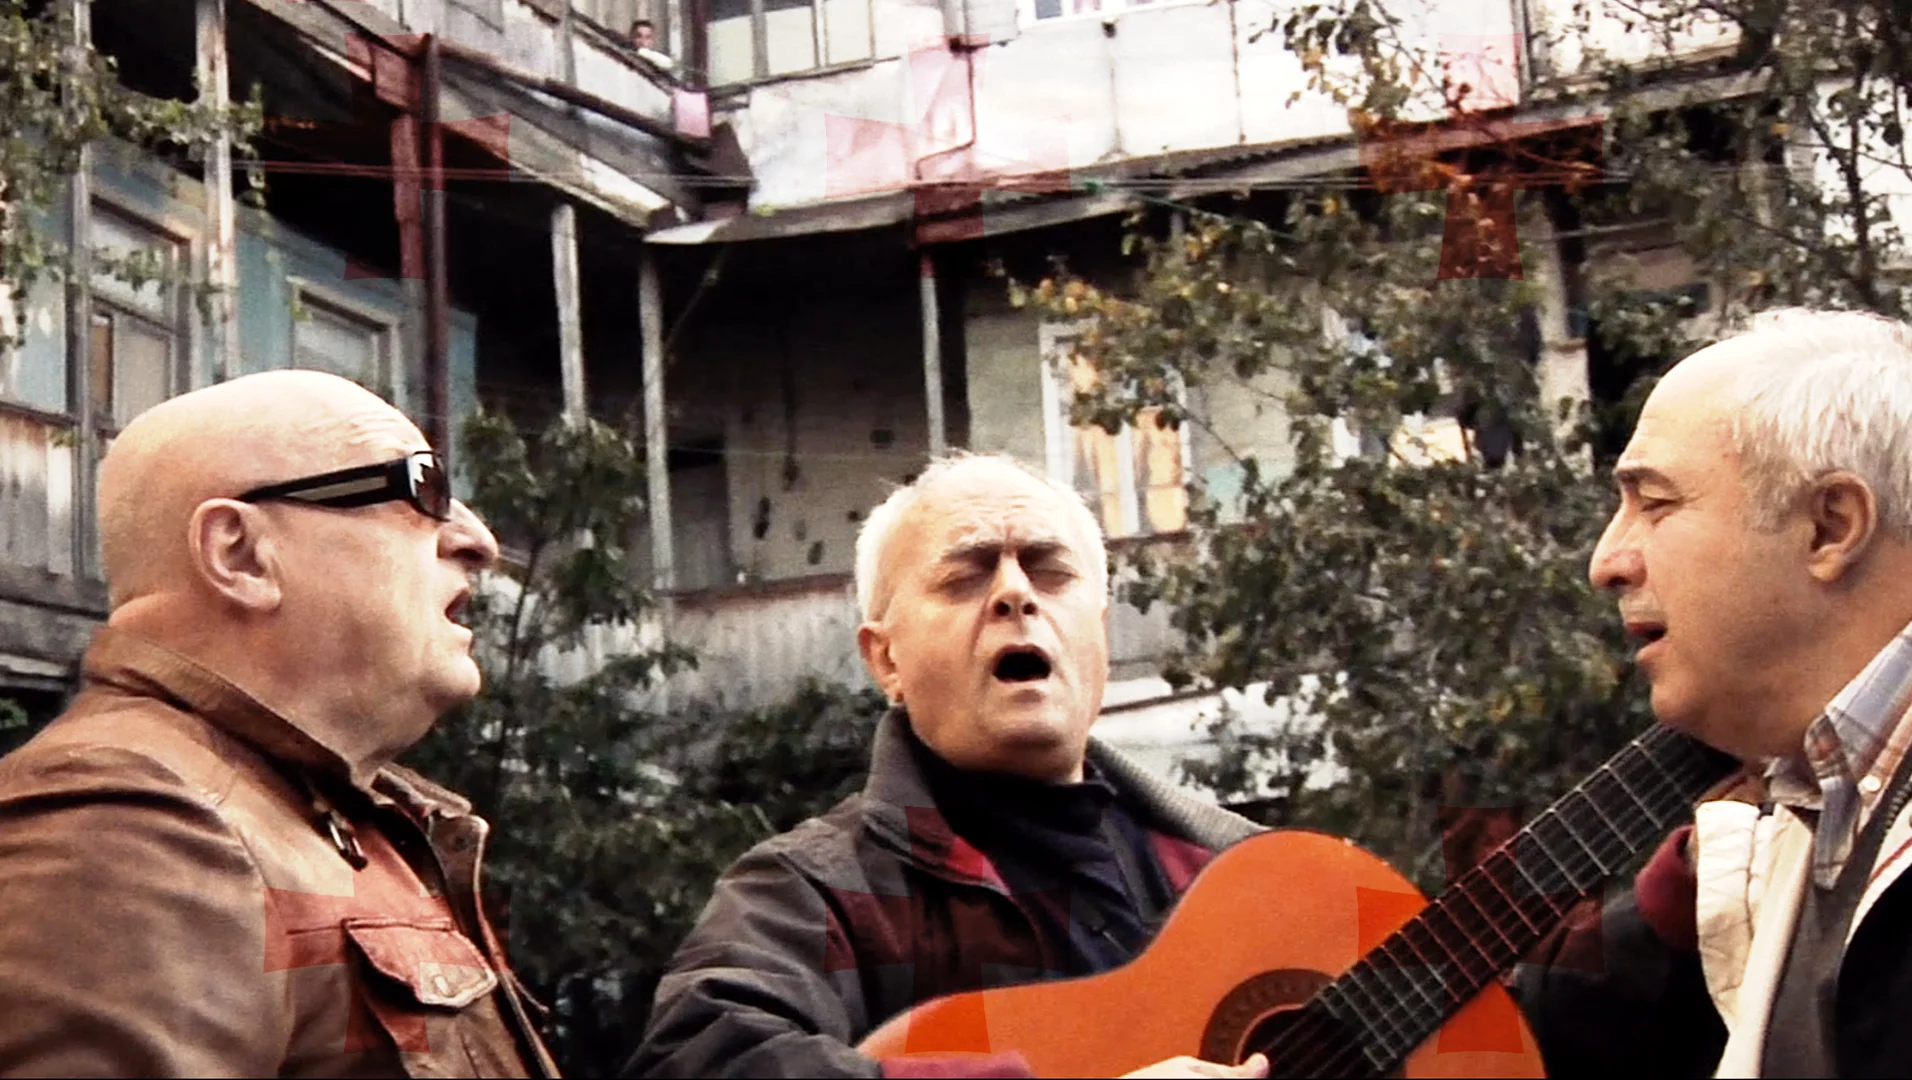 Tbilisi песня. Циспери трио. Трио Тбилиси. Грузинские городские песни. Циспери трио грузинские городские песни.